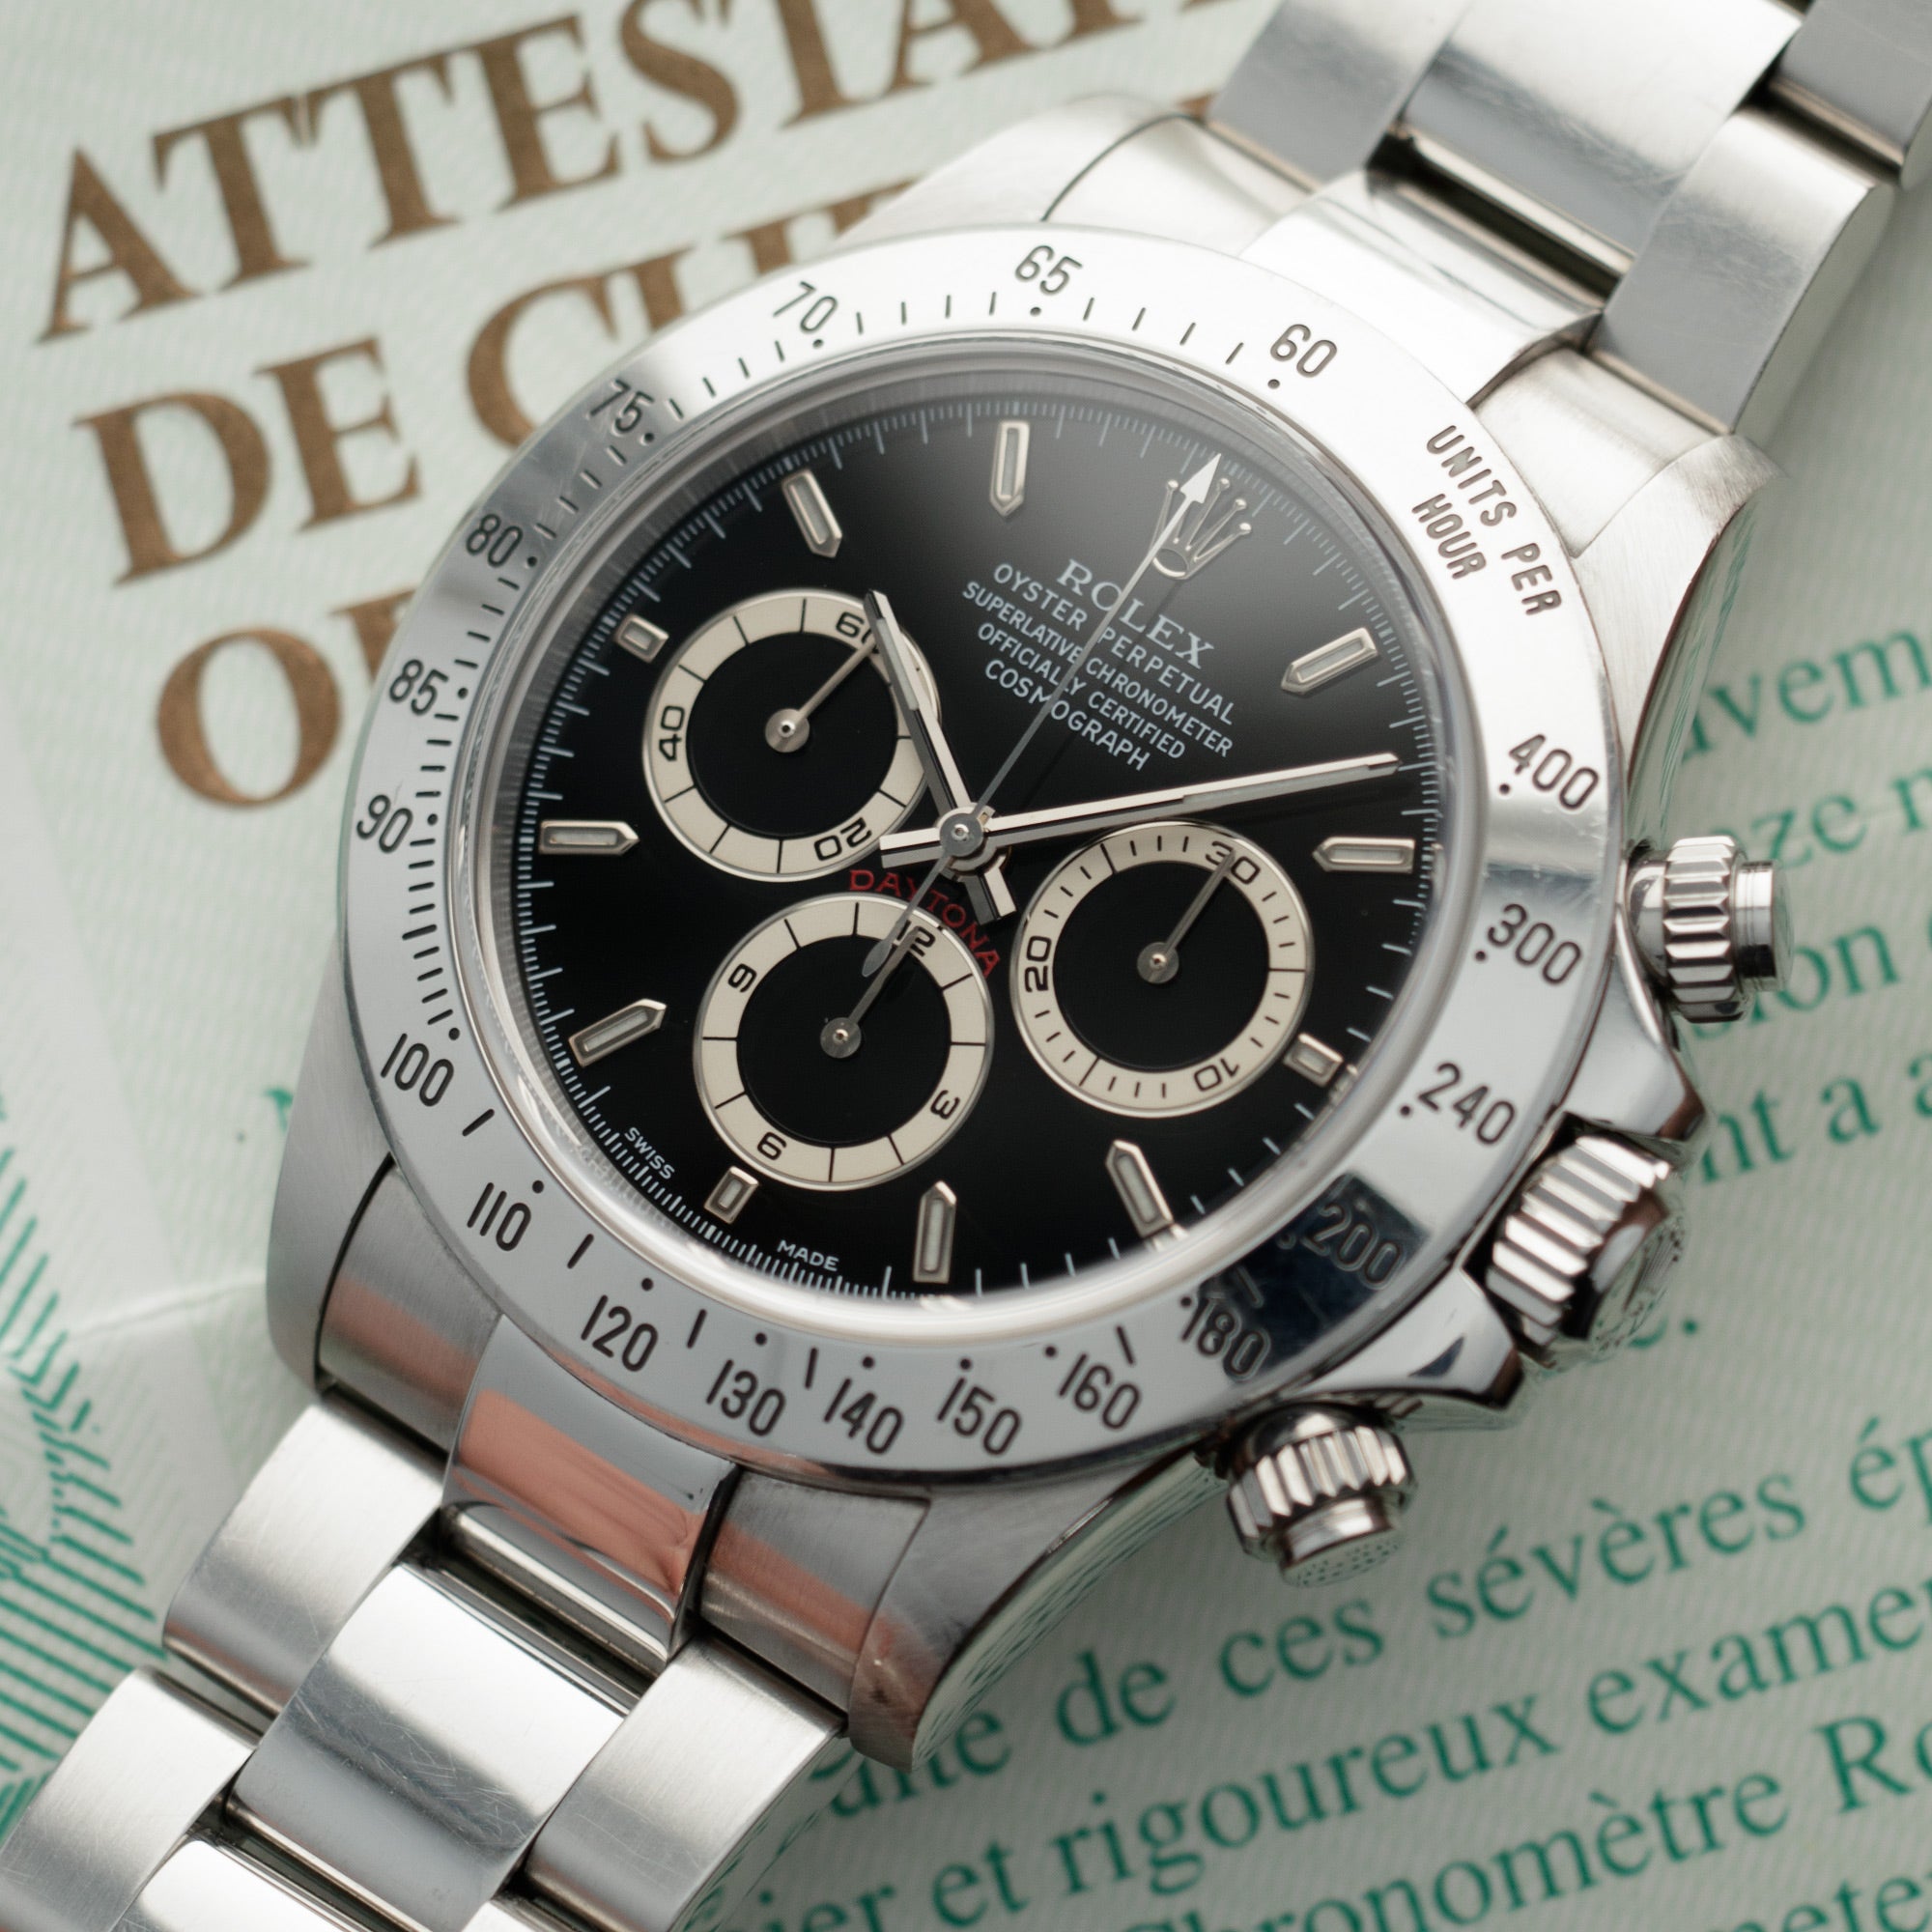 Rolex - Rolex Zenith Daytona Ref. 16520 with Original Papers - The Keystone Watches